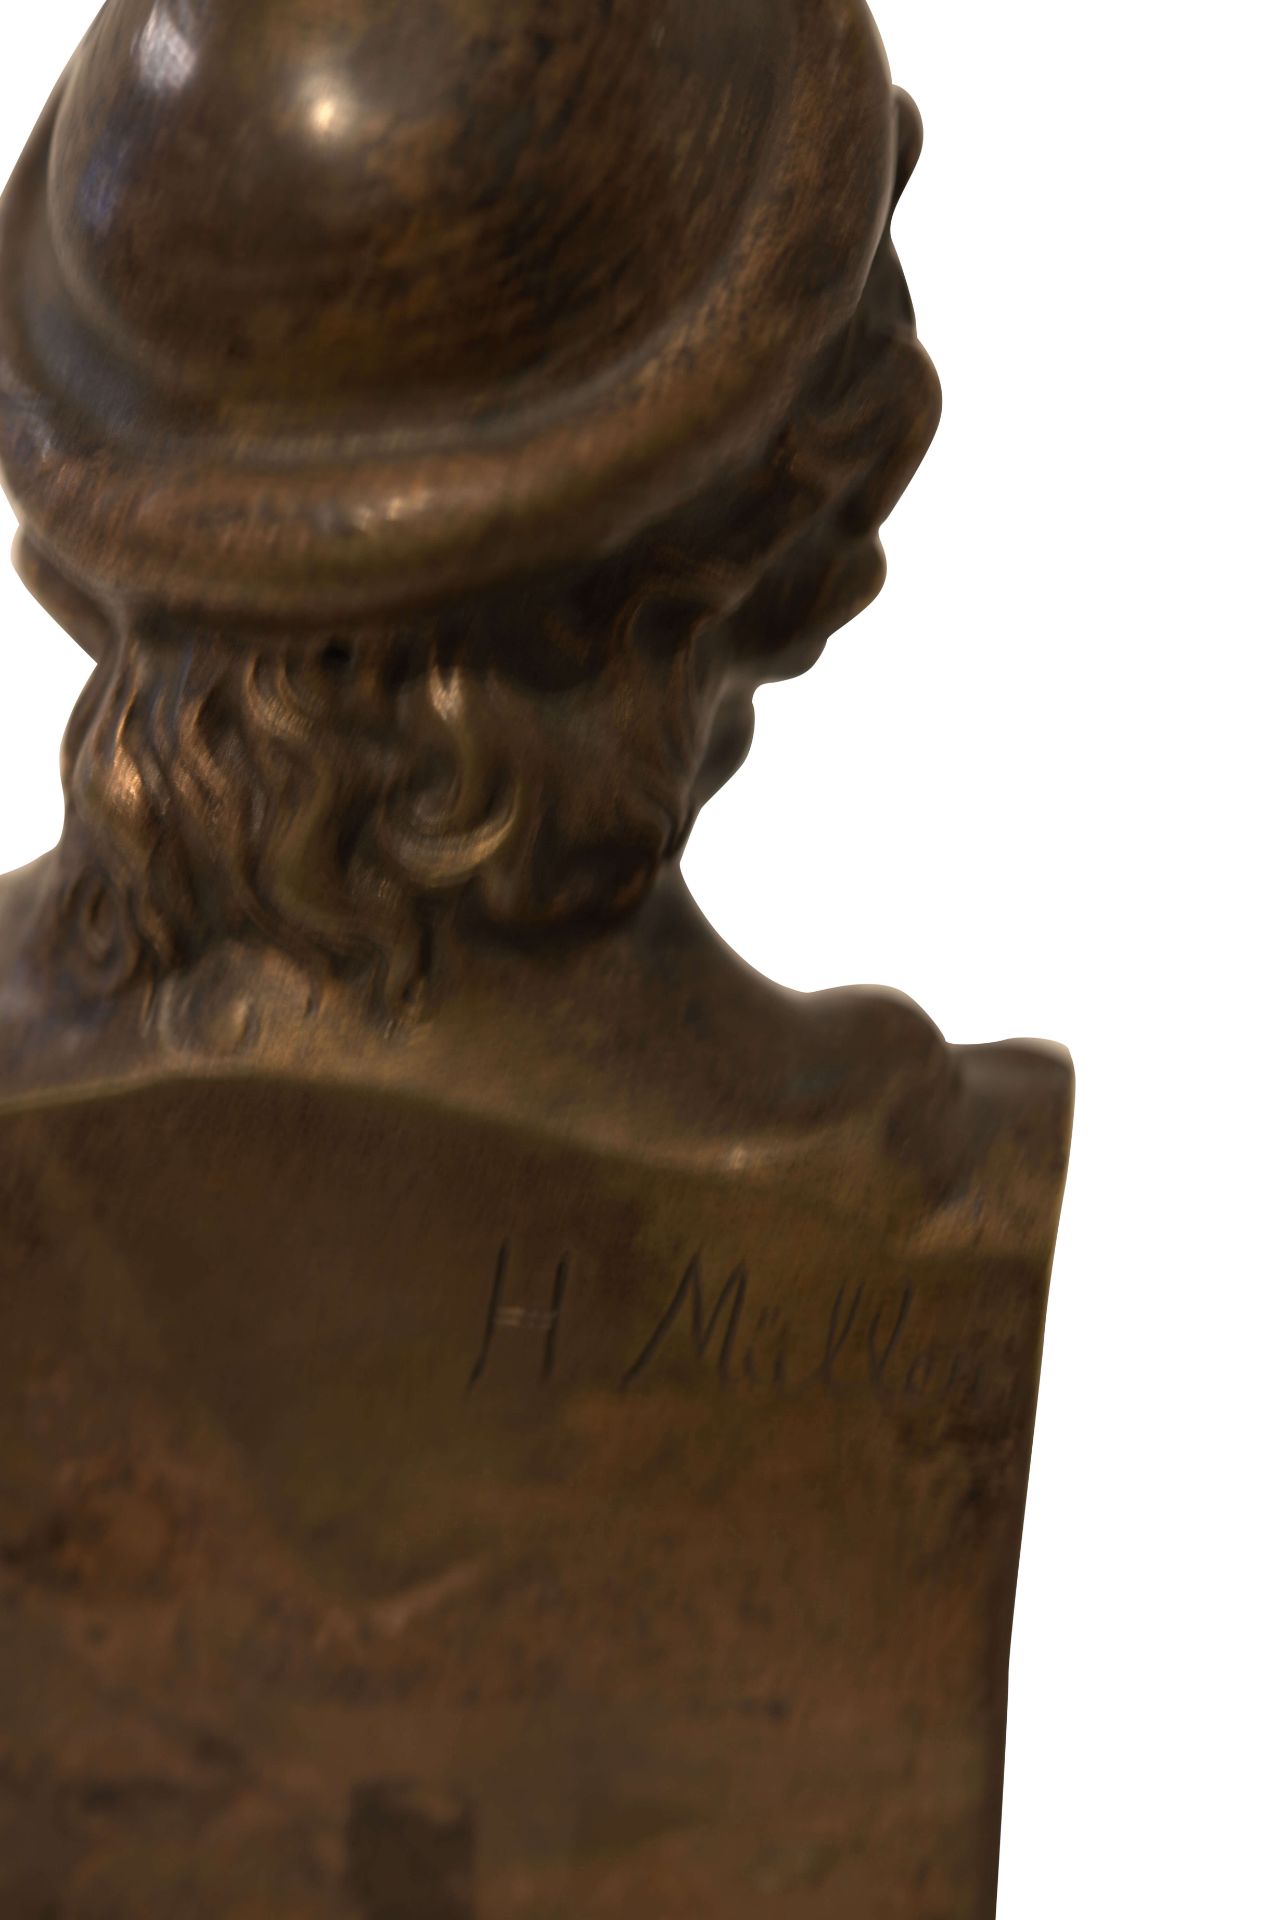 Hans Müller 1873-1937, Büste des Homer | Hans Müller 1873-1937, Bust of Homer - Bild 5 aus 5